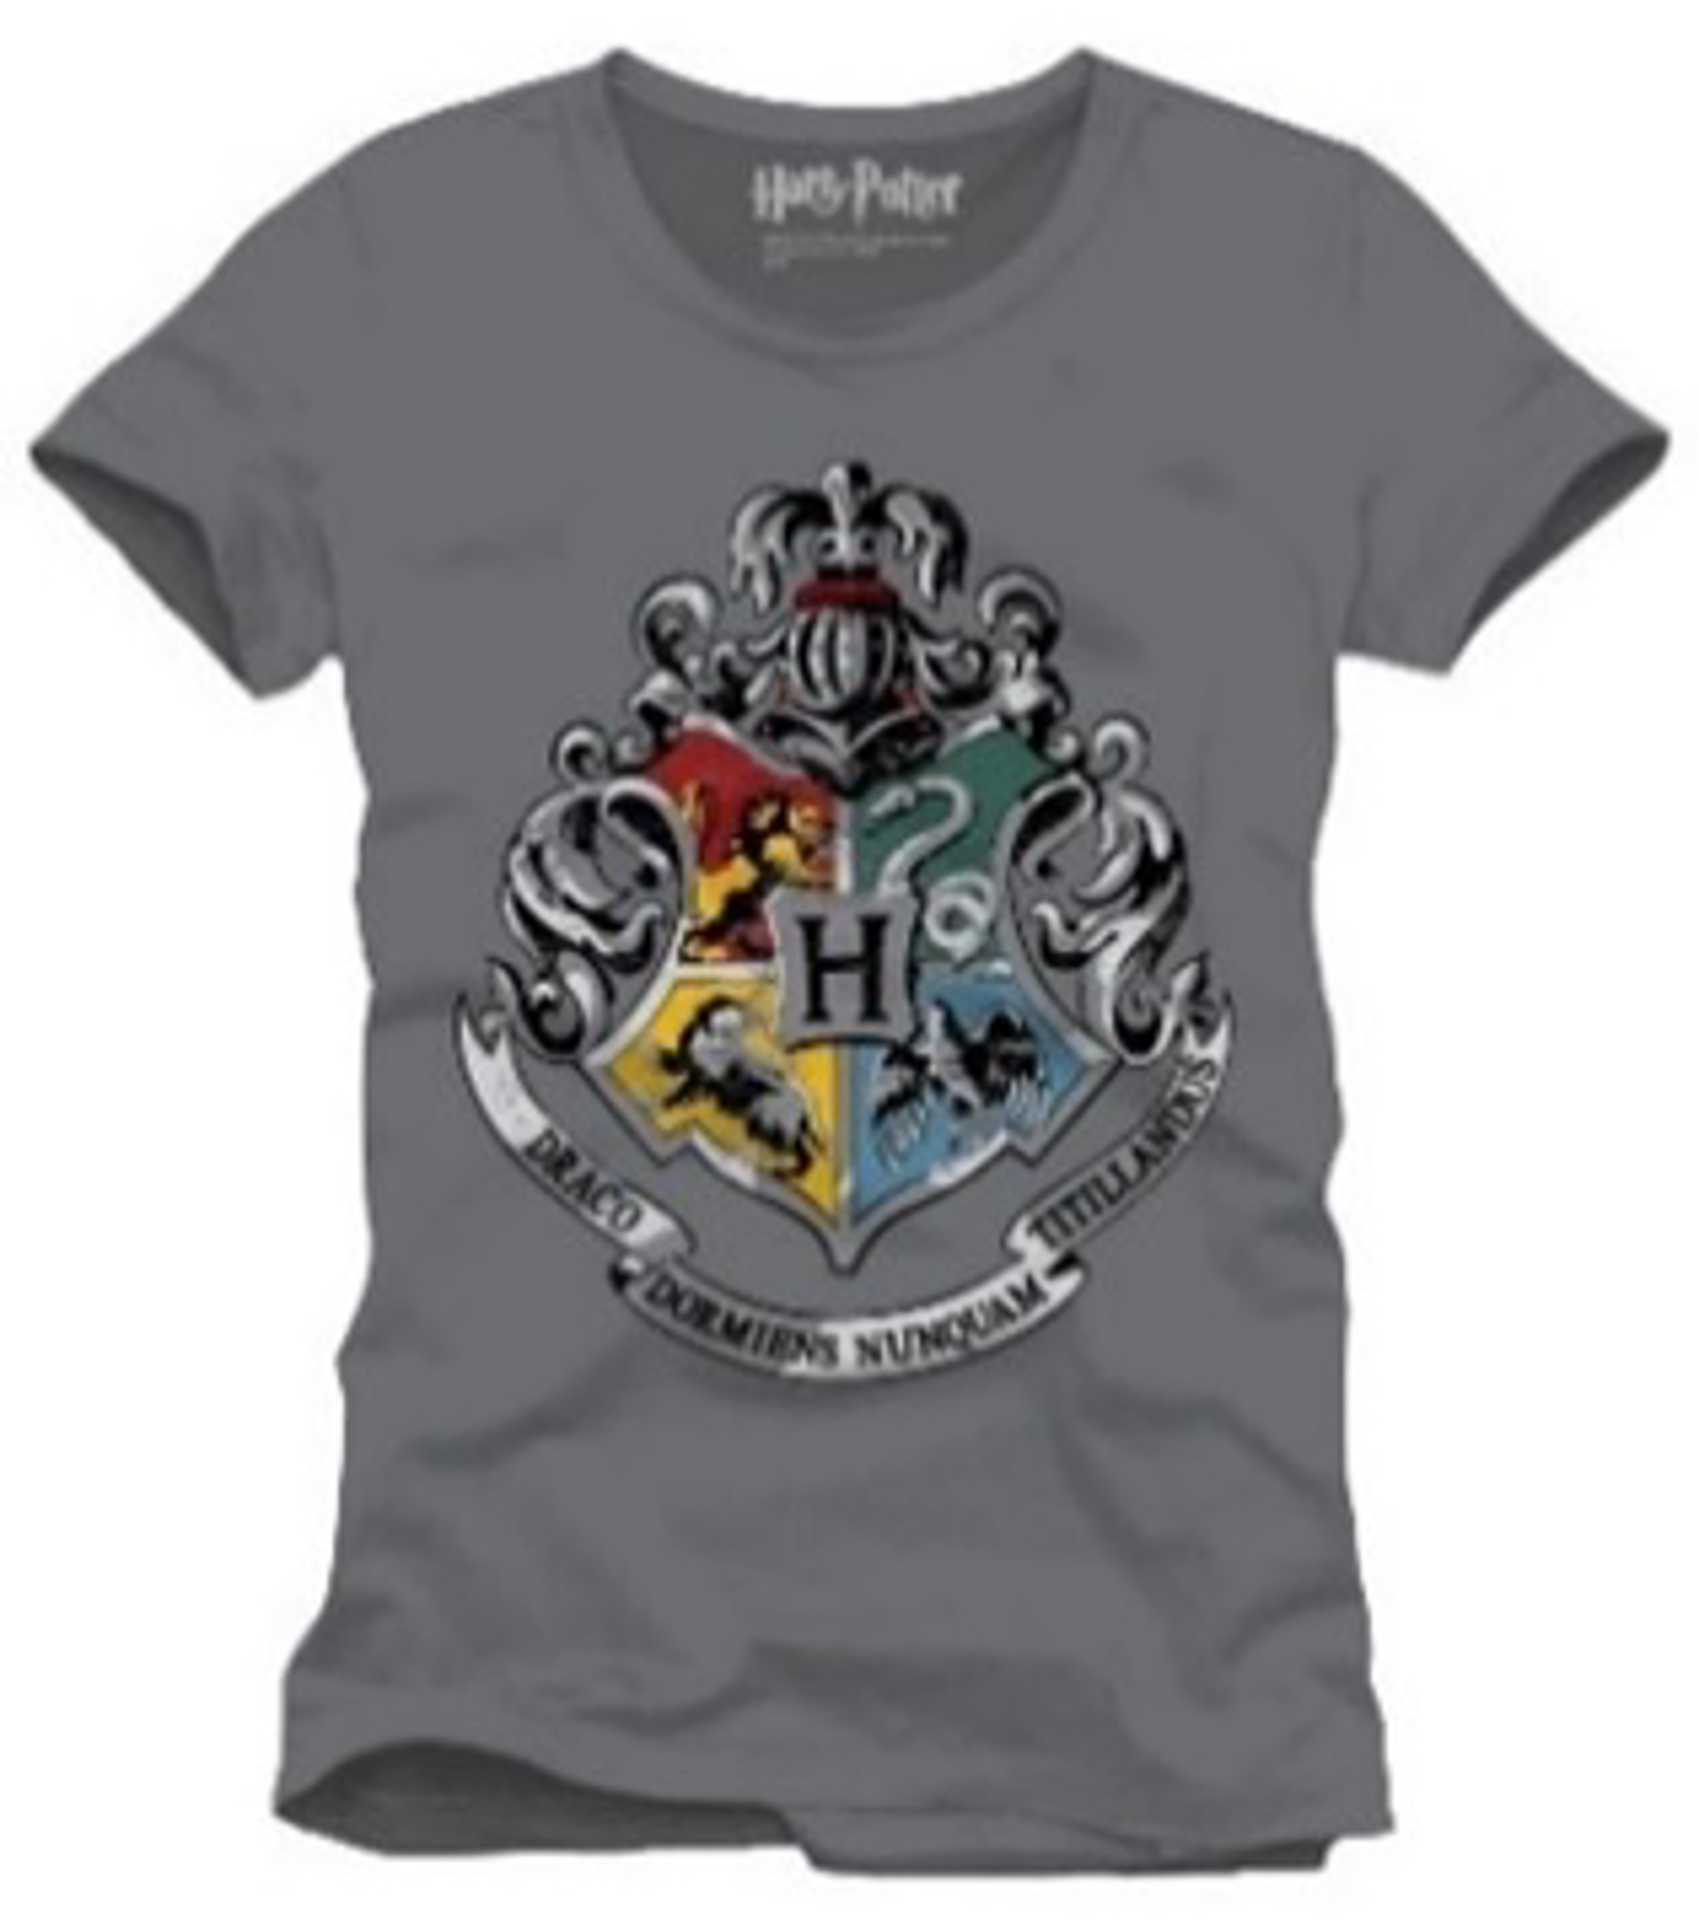 Harry Potter - Hogwarts 4 Houses Crest Anthracite T-Shirt - S